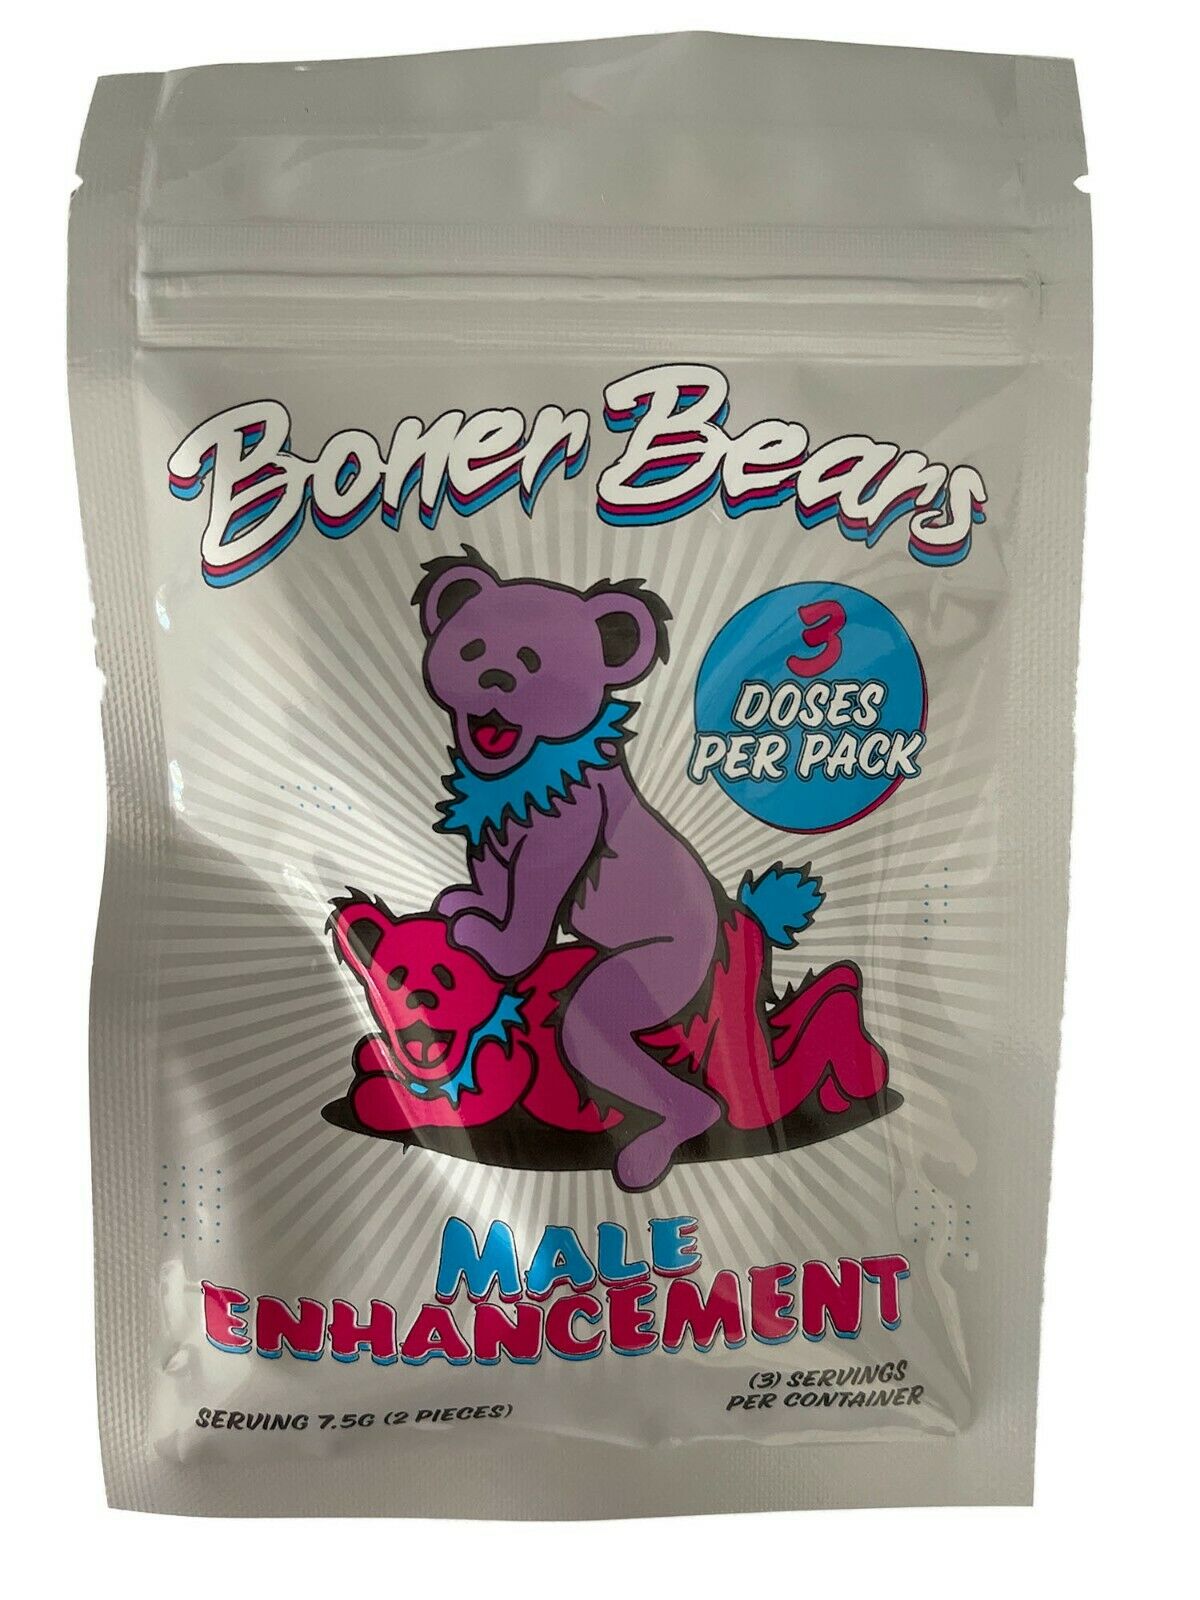 Can women take boner bears